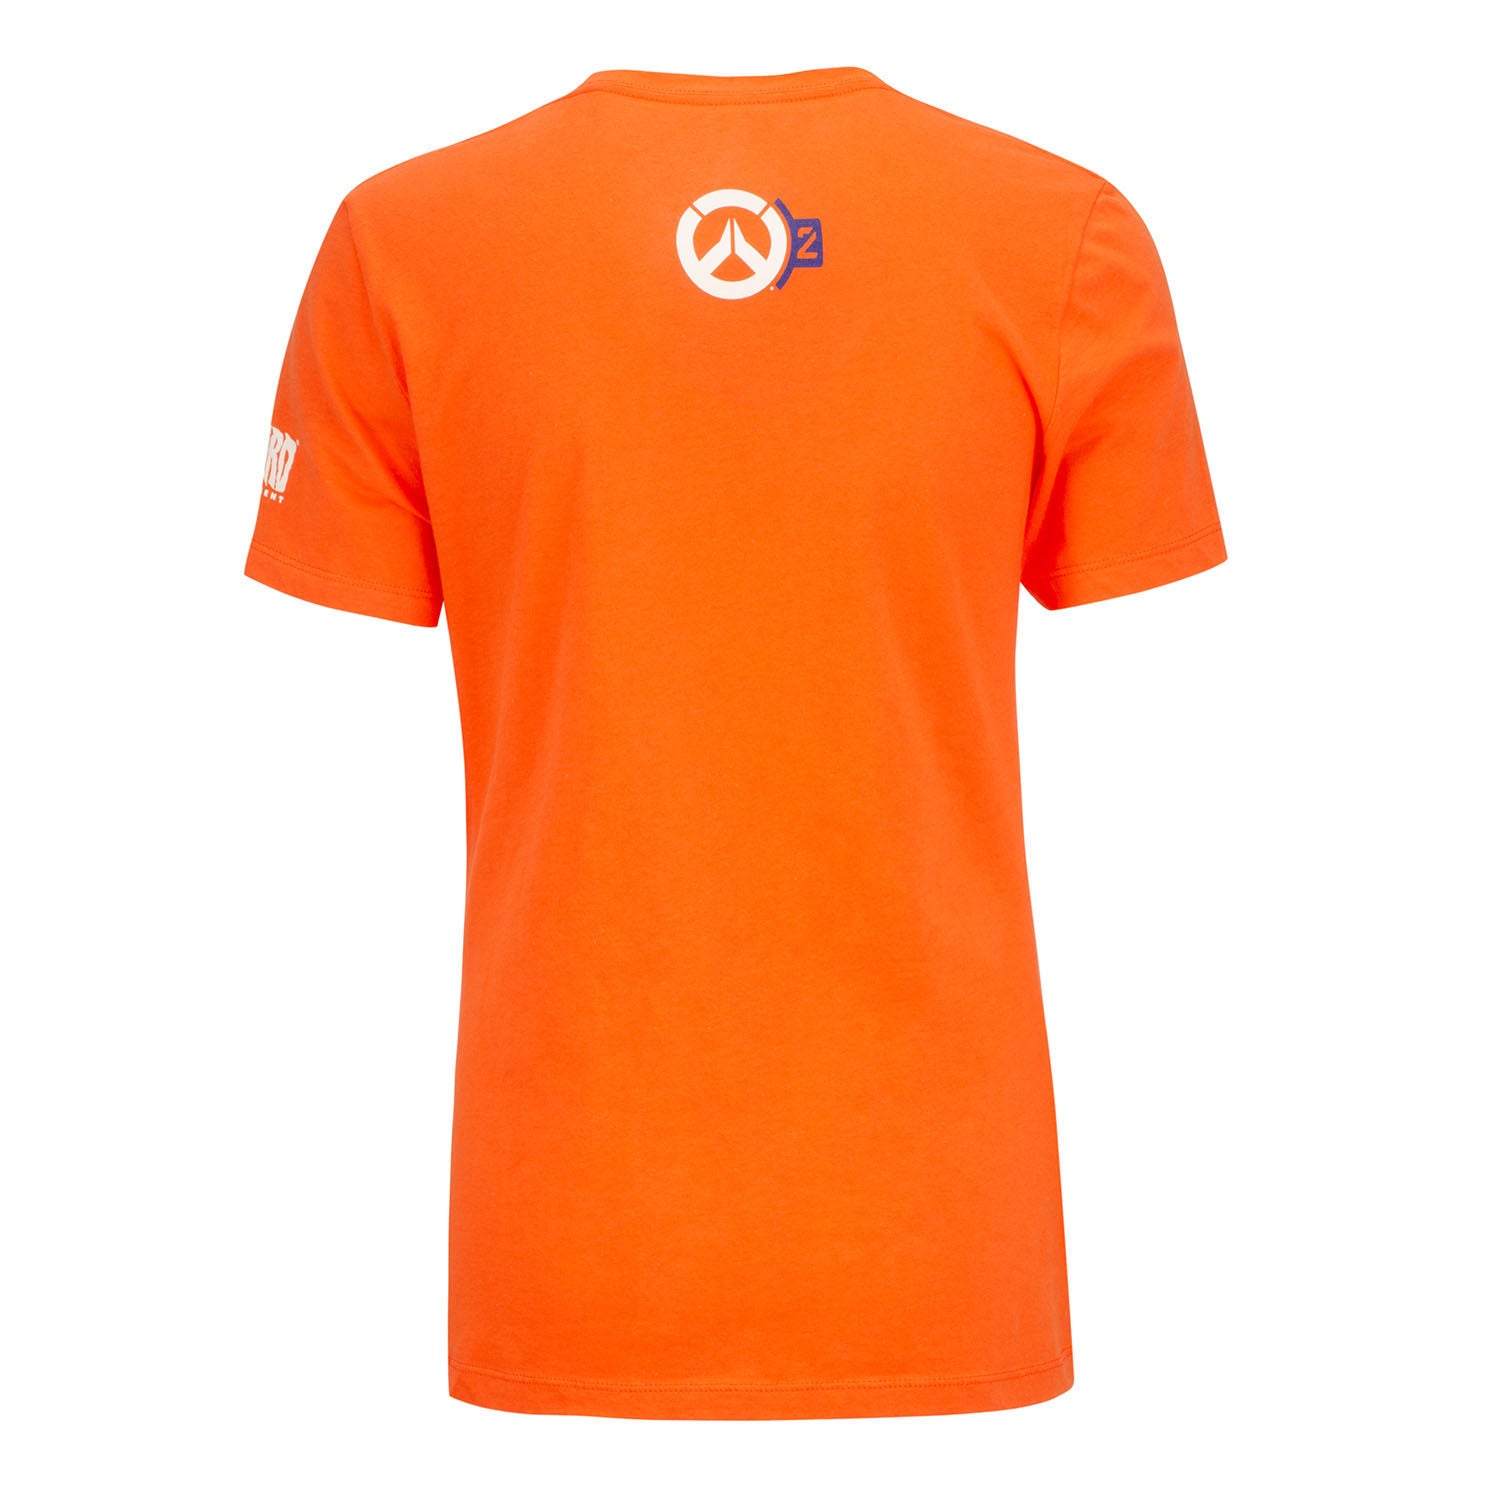 Overwatch 2 Tracer Women's Orange V-Neck T-Shirt - Back View